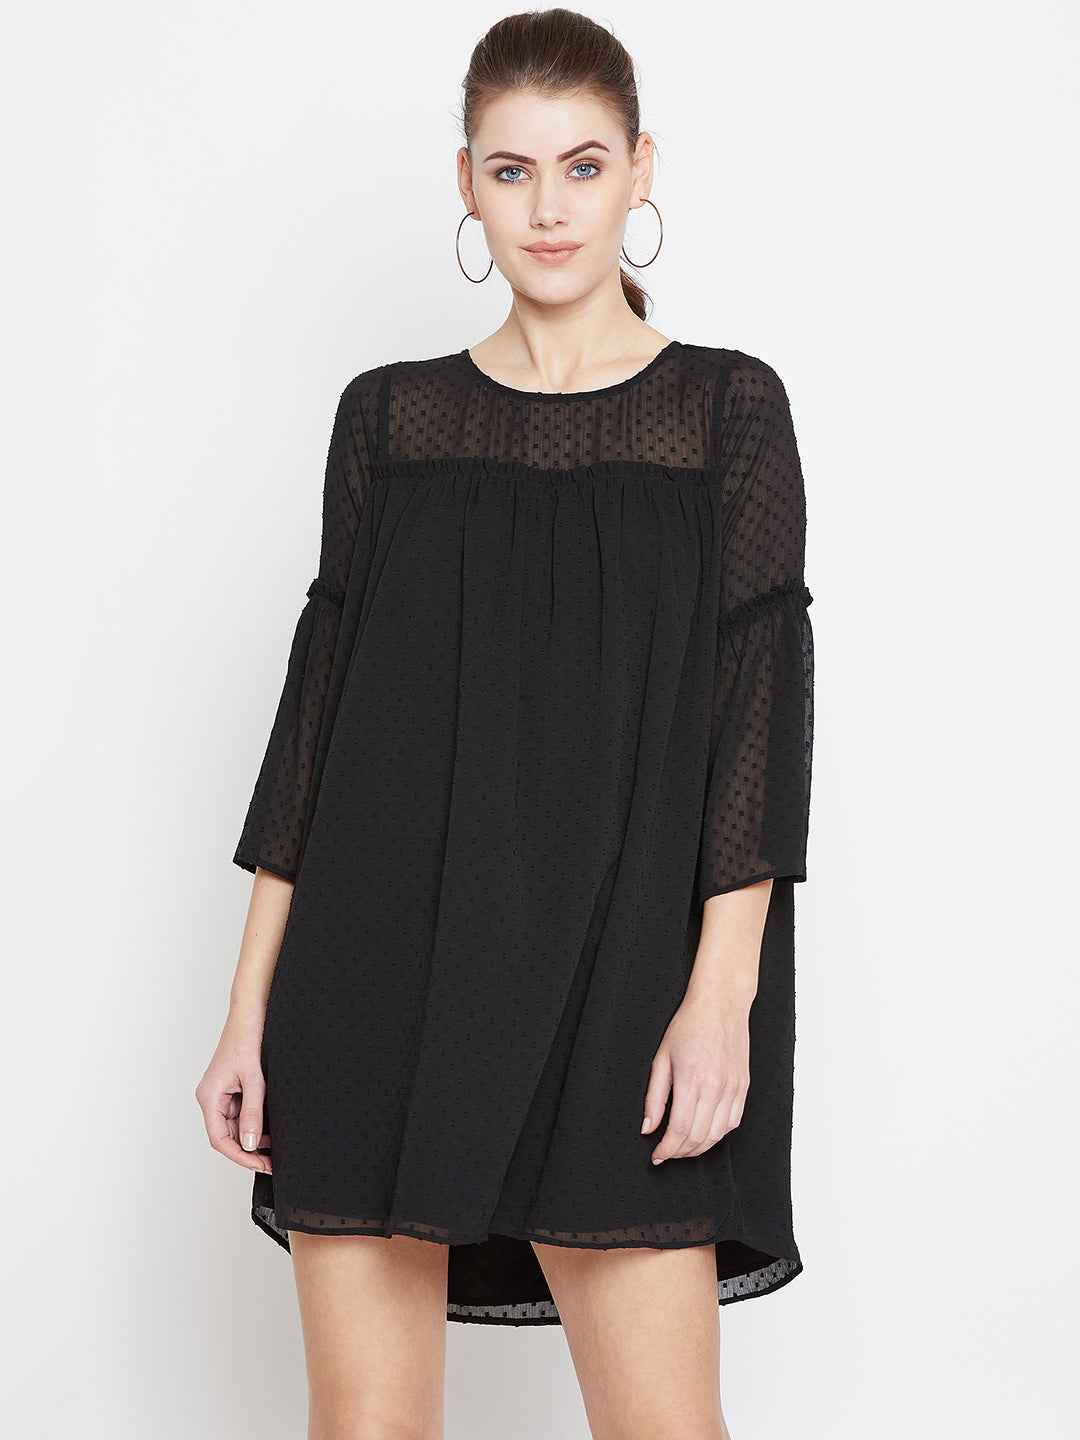 Berrylush Women Black Self-Design Round-Neck High-Low Hem A-Line Mini Dress